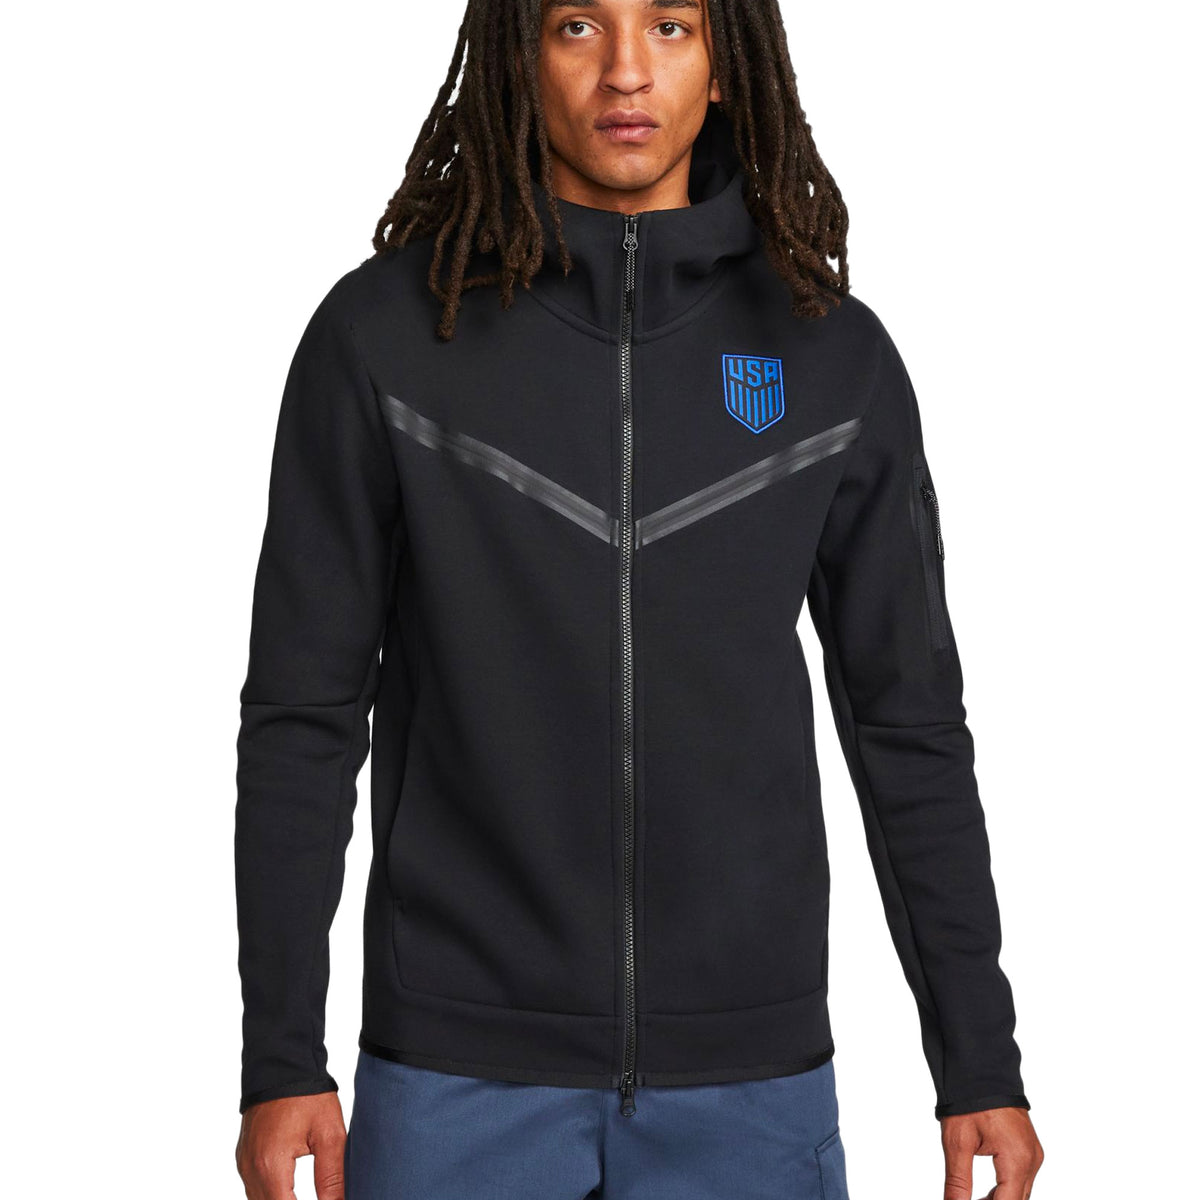 Nike Men's USA Tech Fleece Hoodie Jacket Black/Bright Blue – Soccer